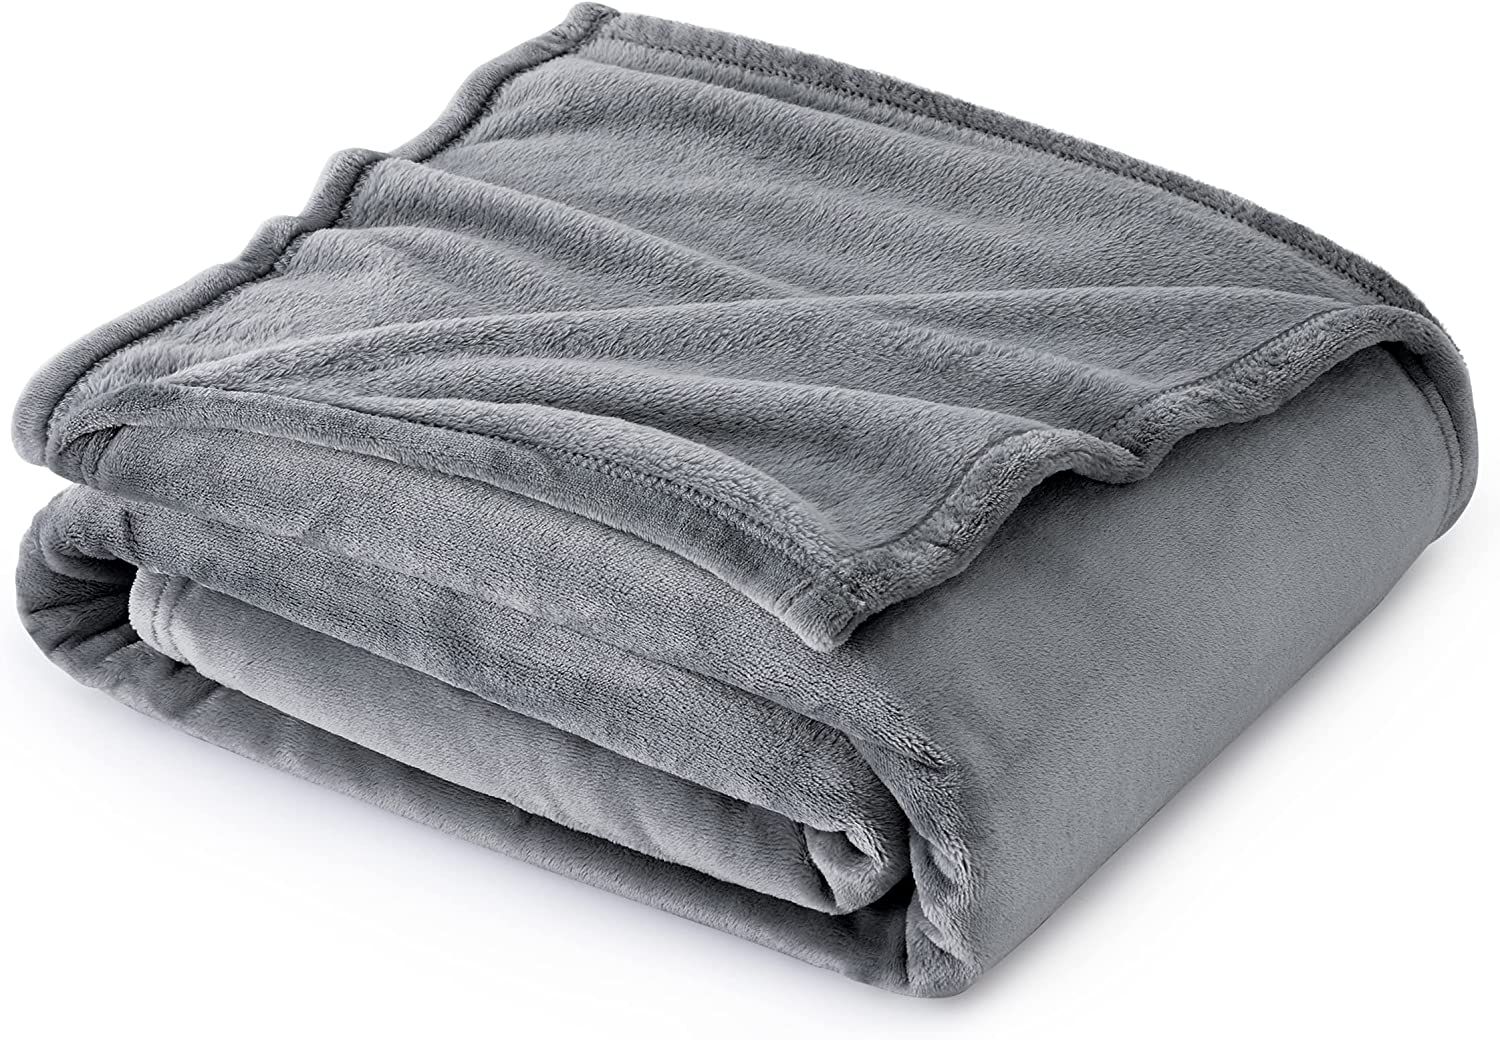 Bedsure Breathable Cozy Fleece Throw Blanket